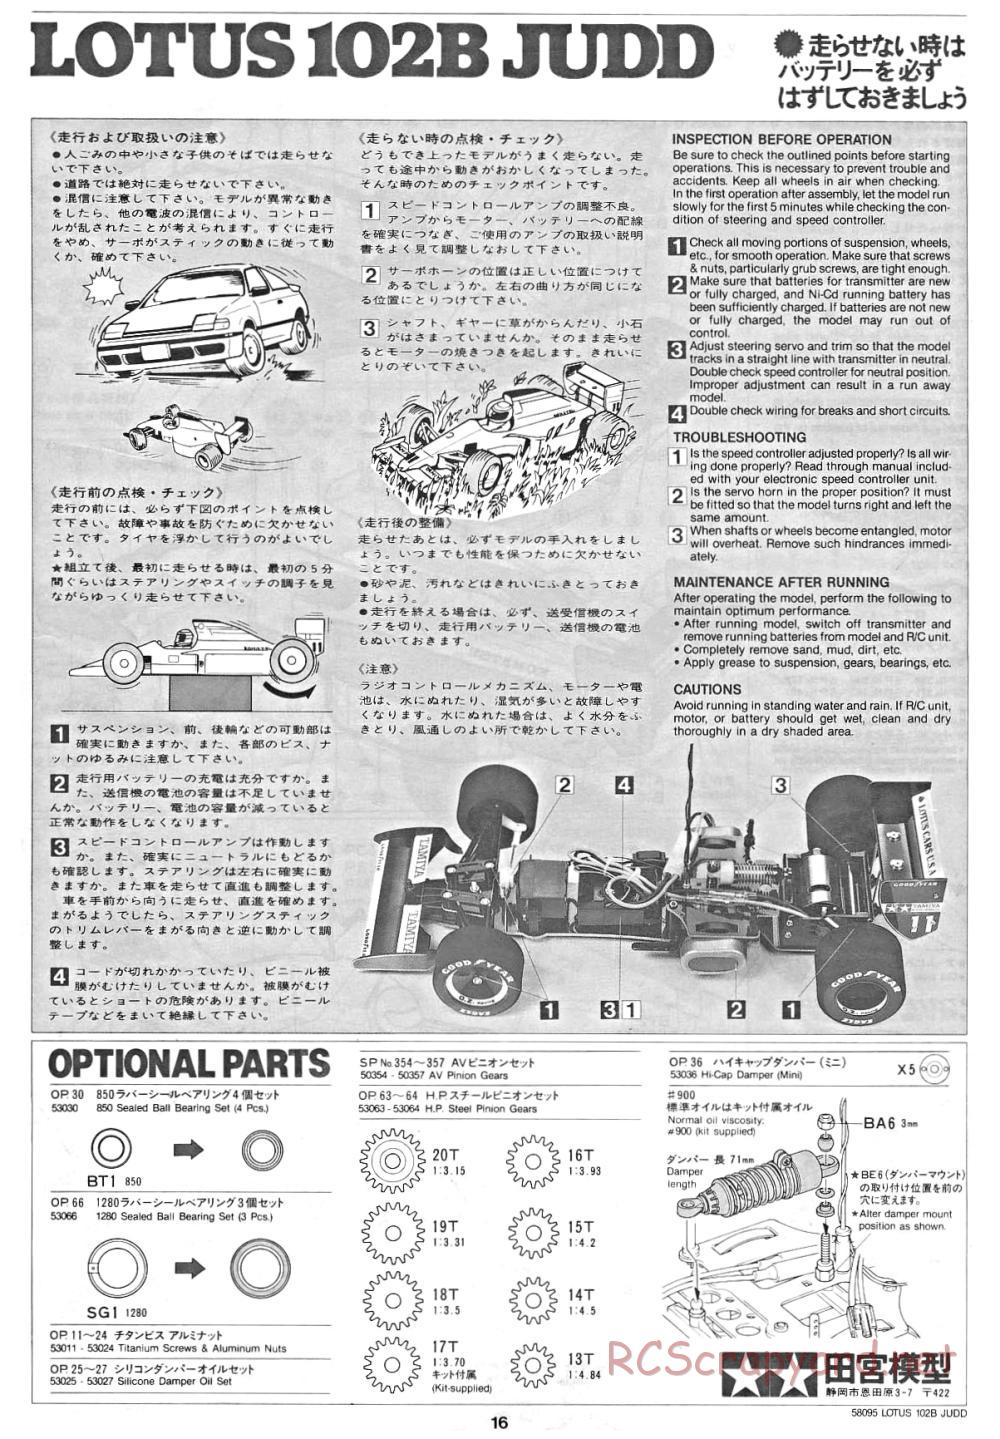 Tamiya - Lotus 102B Judd - 58095 - Manual - Page 16